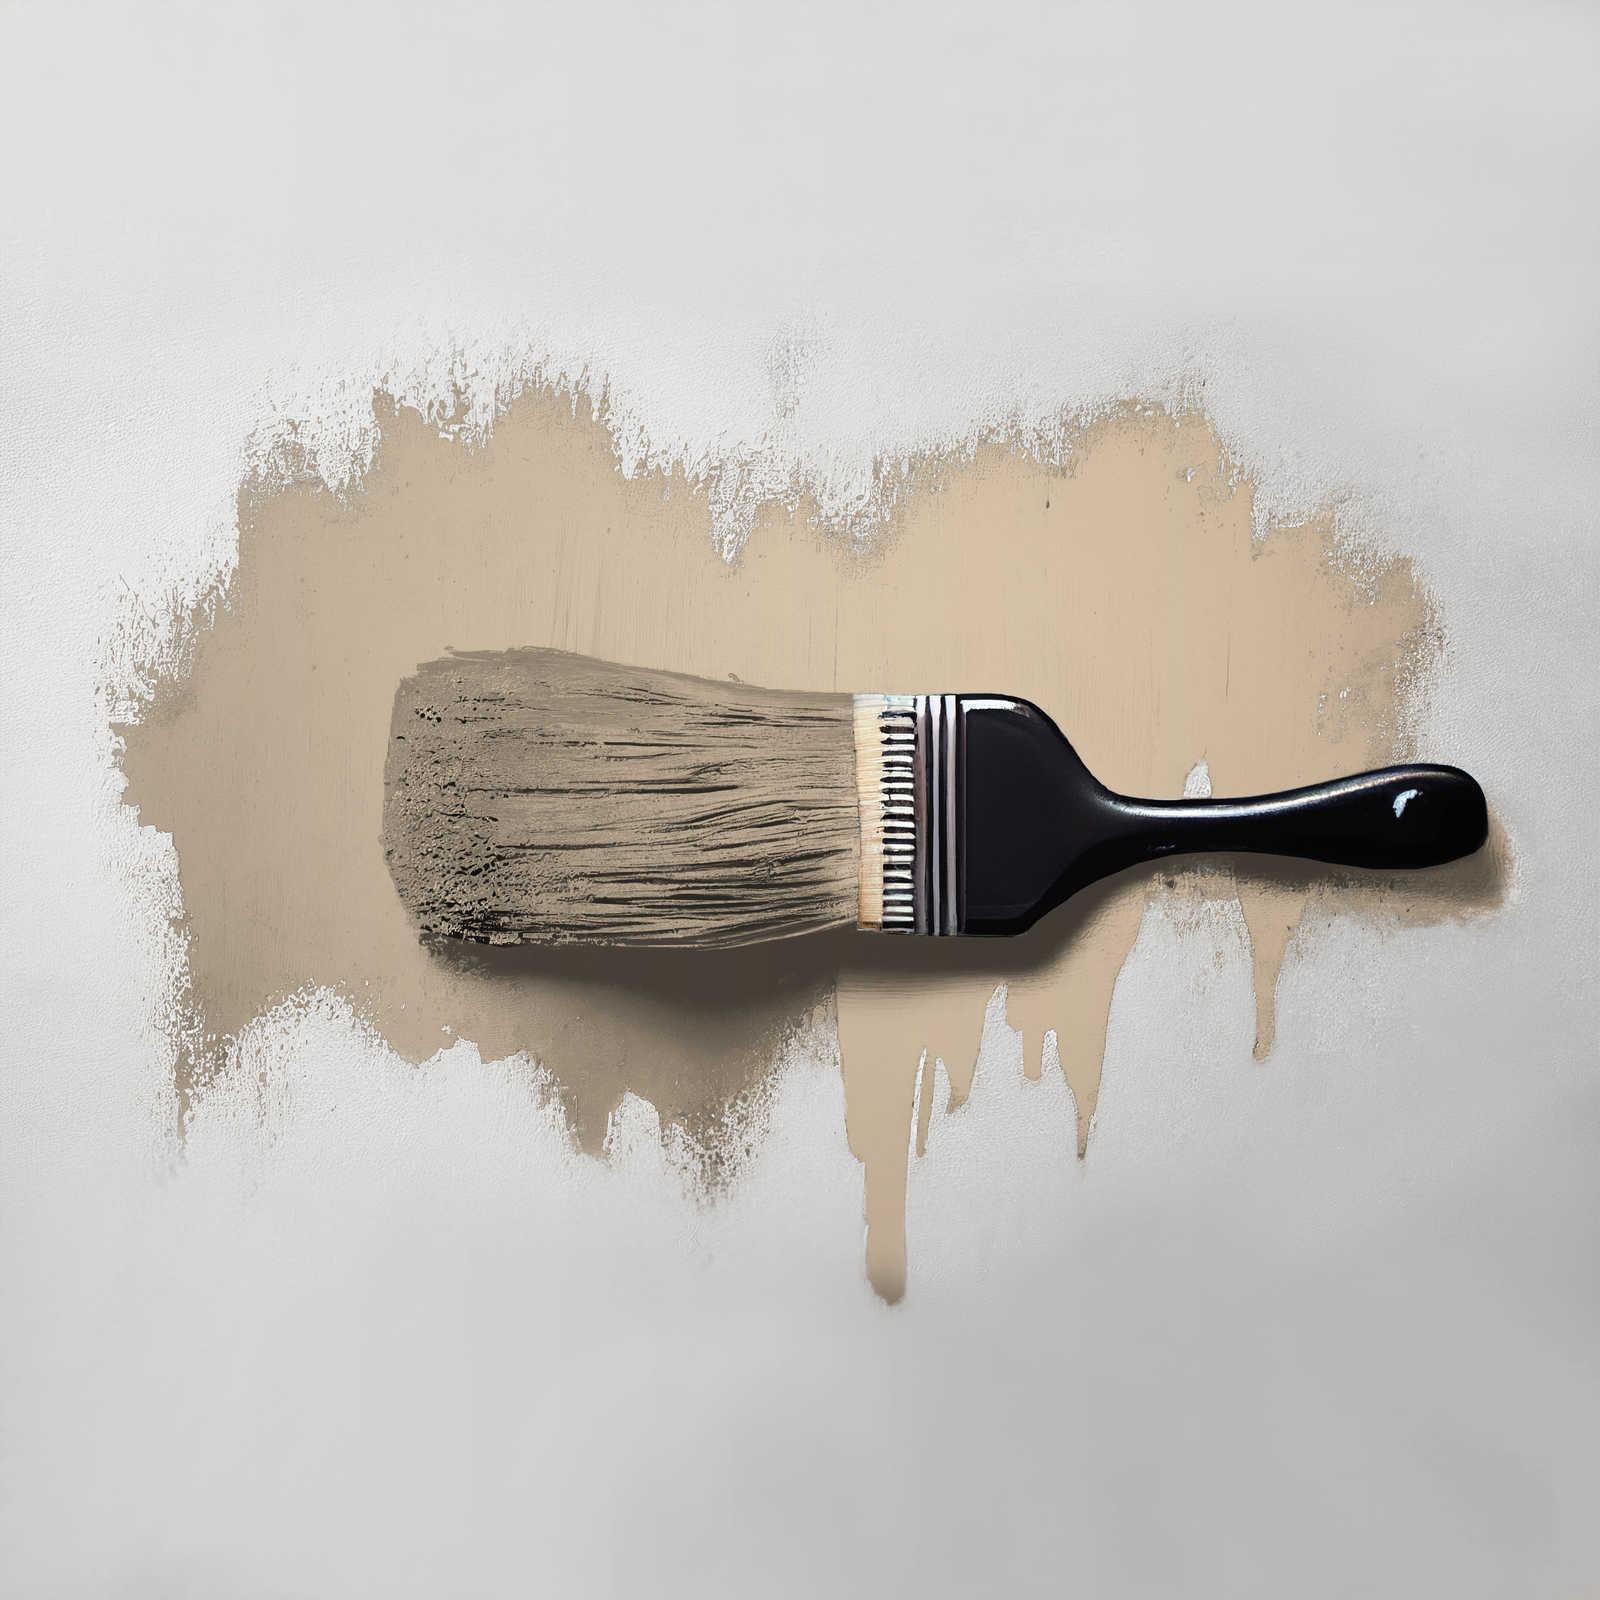             Peinture murale TCK6002 »Flat White Coffee« en beige chaud – 2,5 litres
        